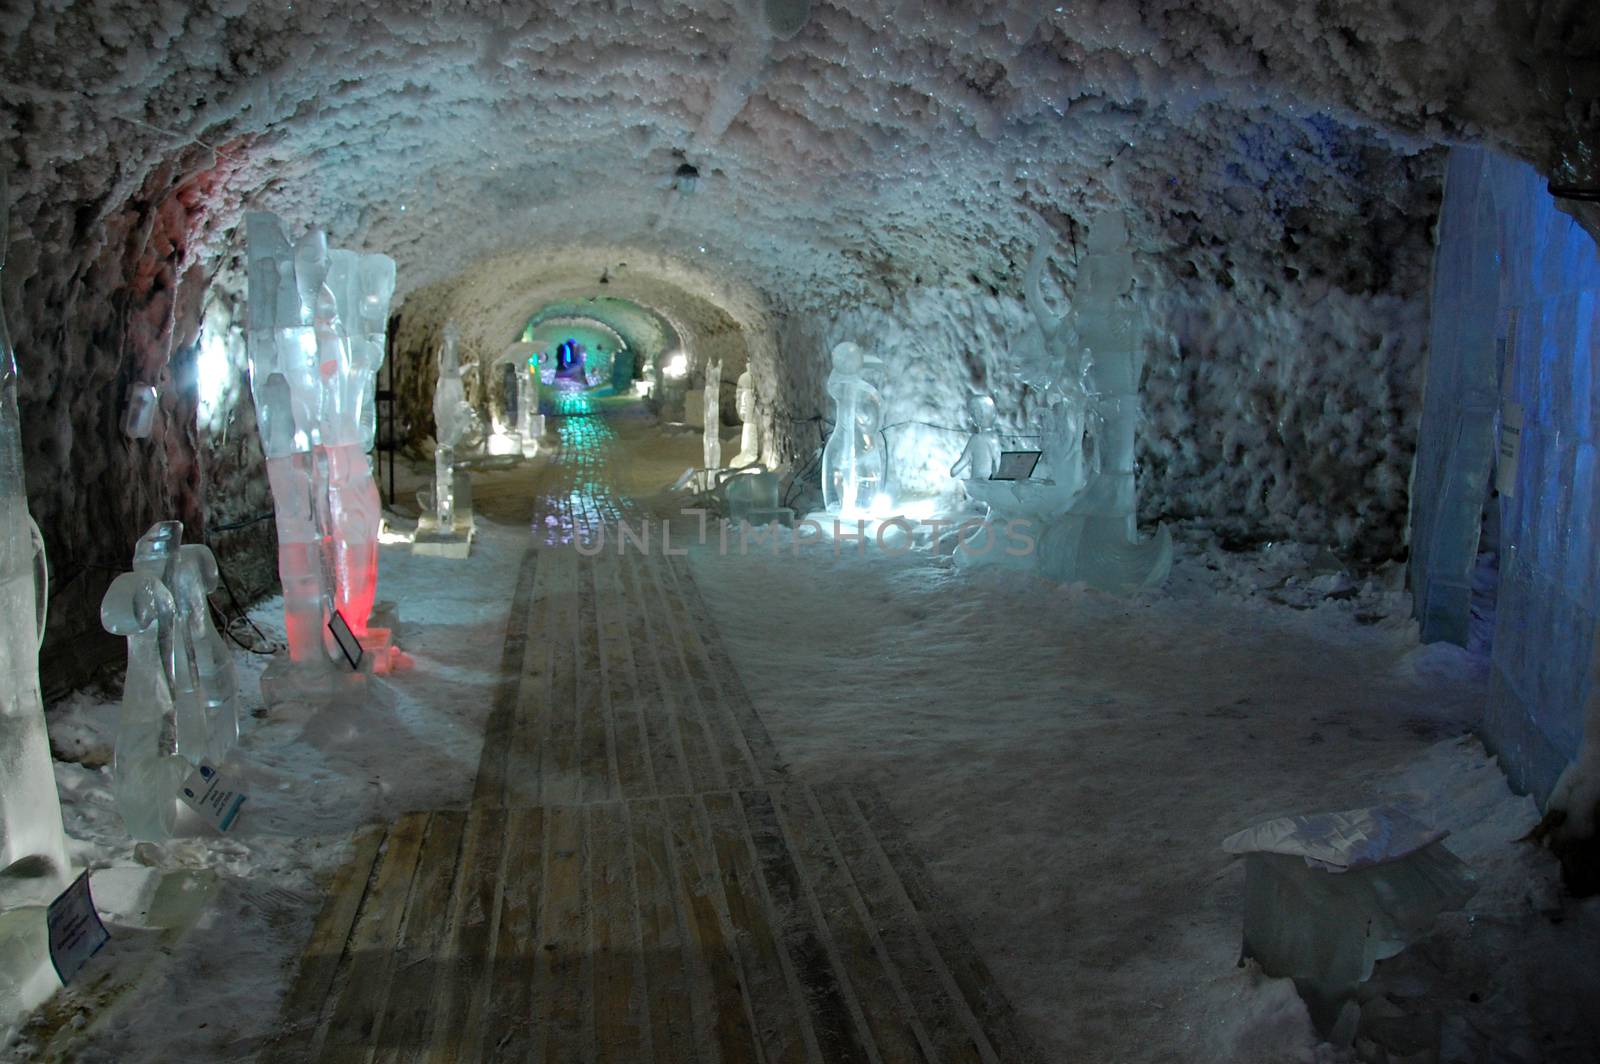 Underground permafrost ice cave by danemo